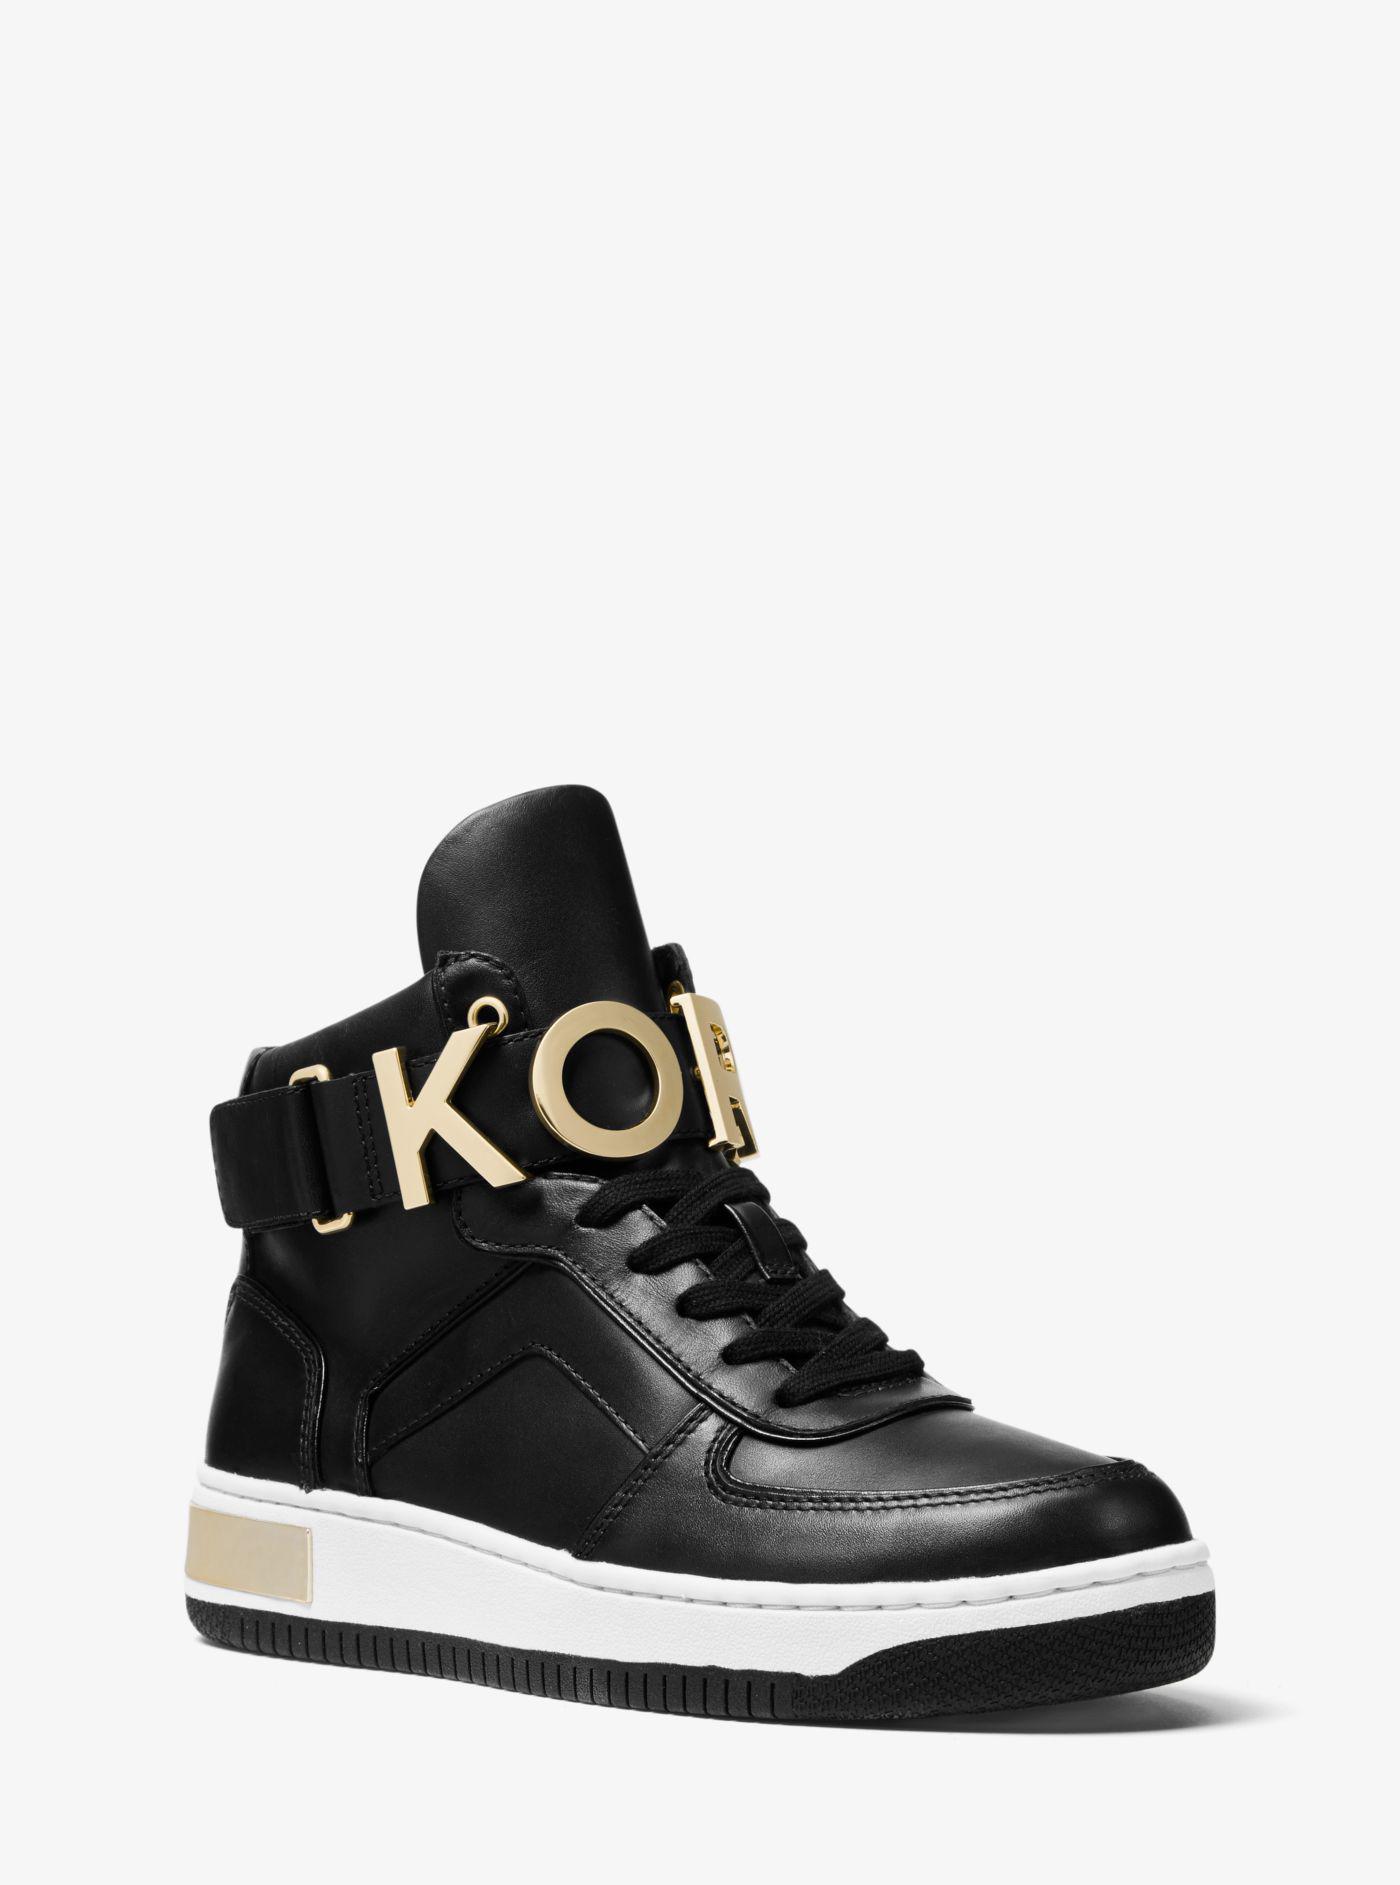 Michael Kors Cortlandt Embellished Leather High-top Sneaker in Black - Lyst